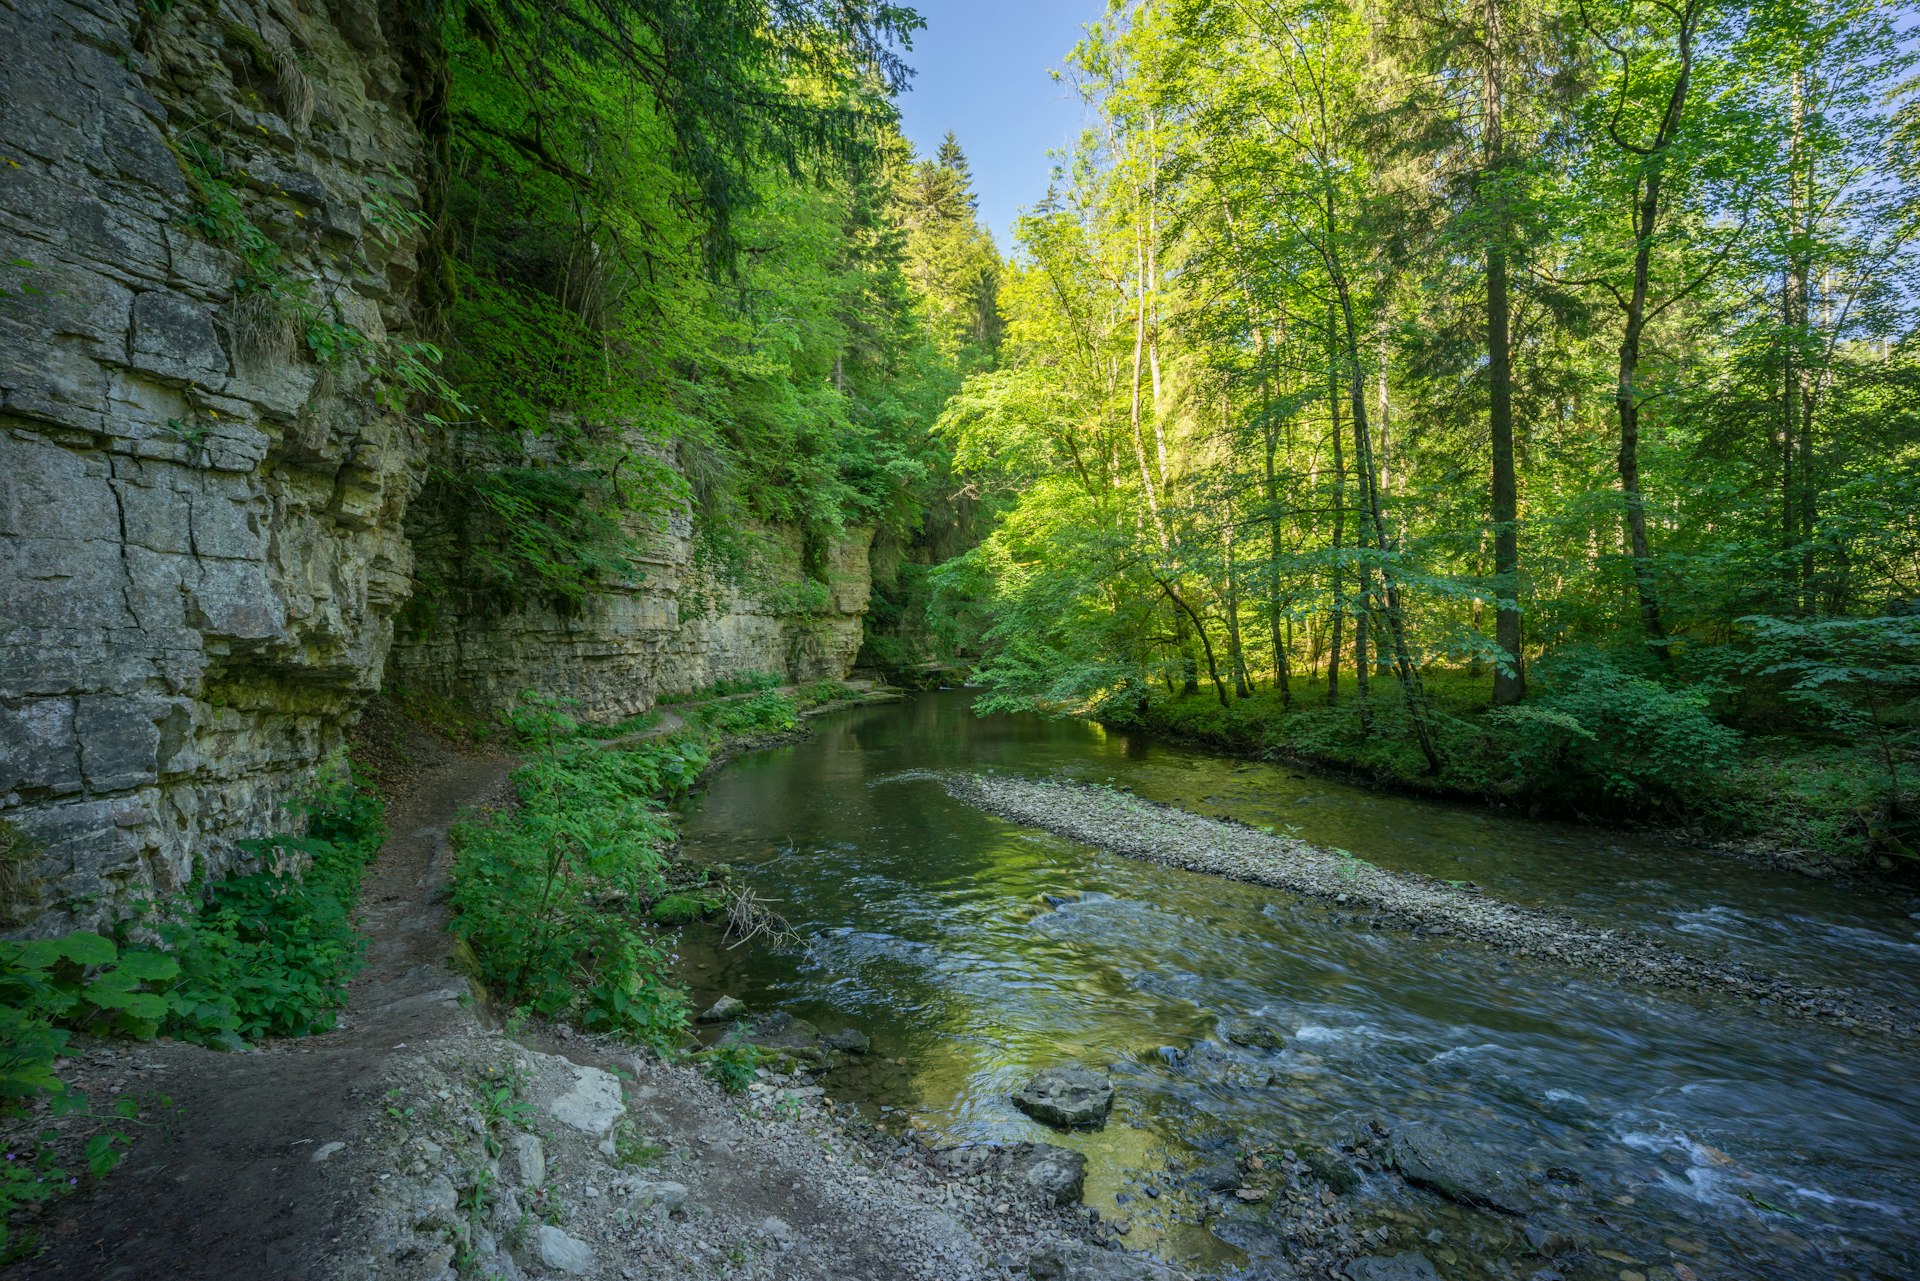 A river running through the Wutach Valley in Wutachschlucht, Germany